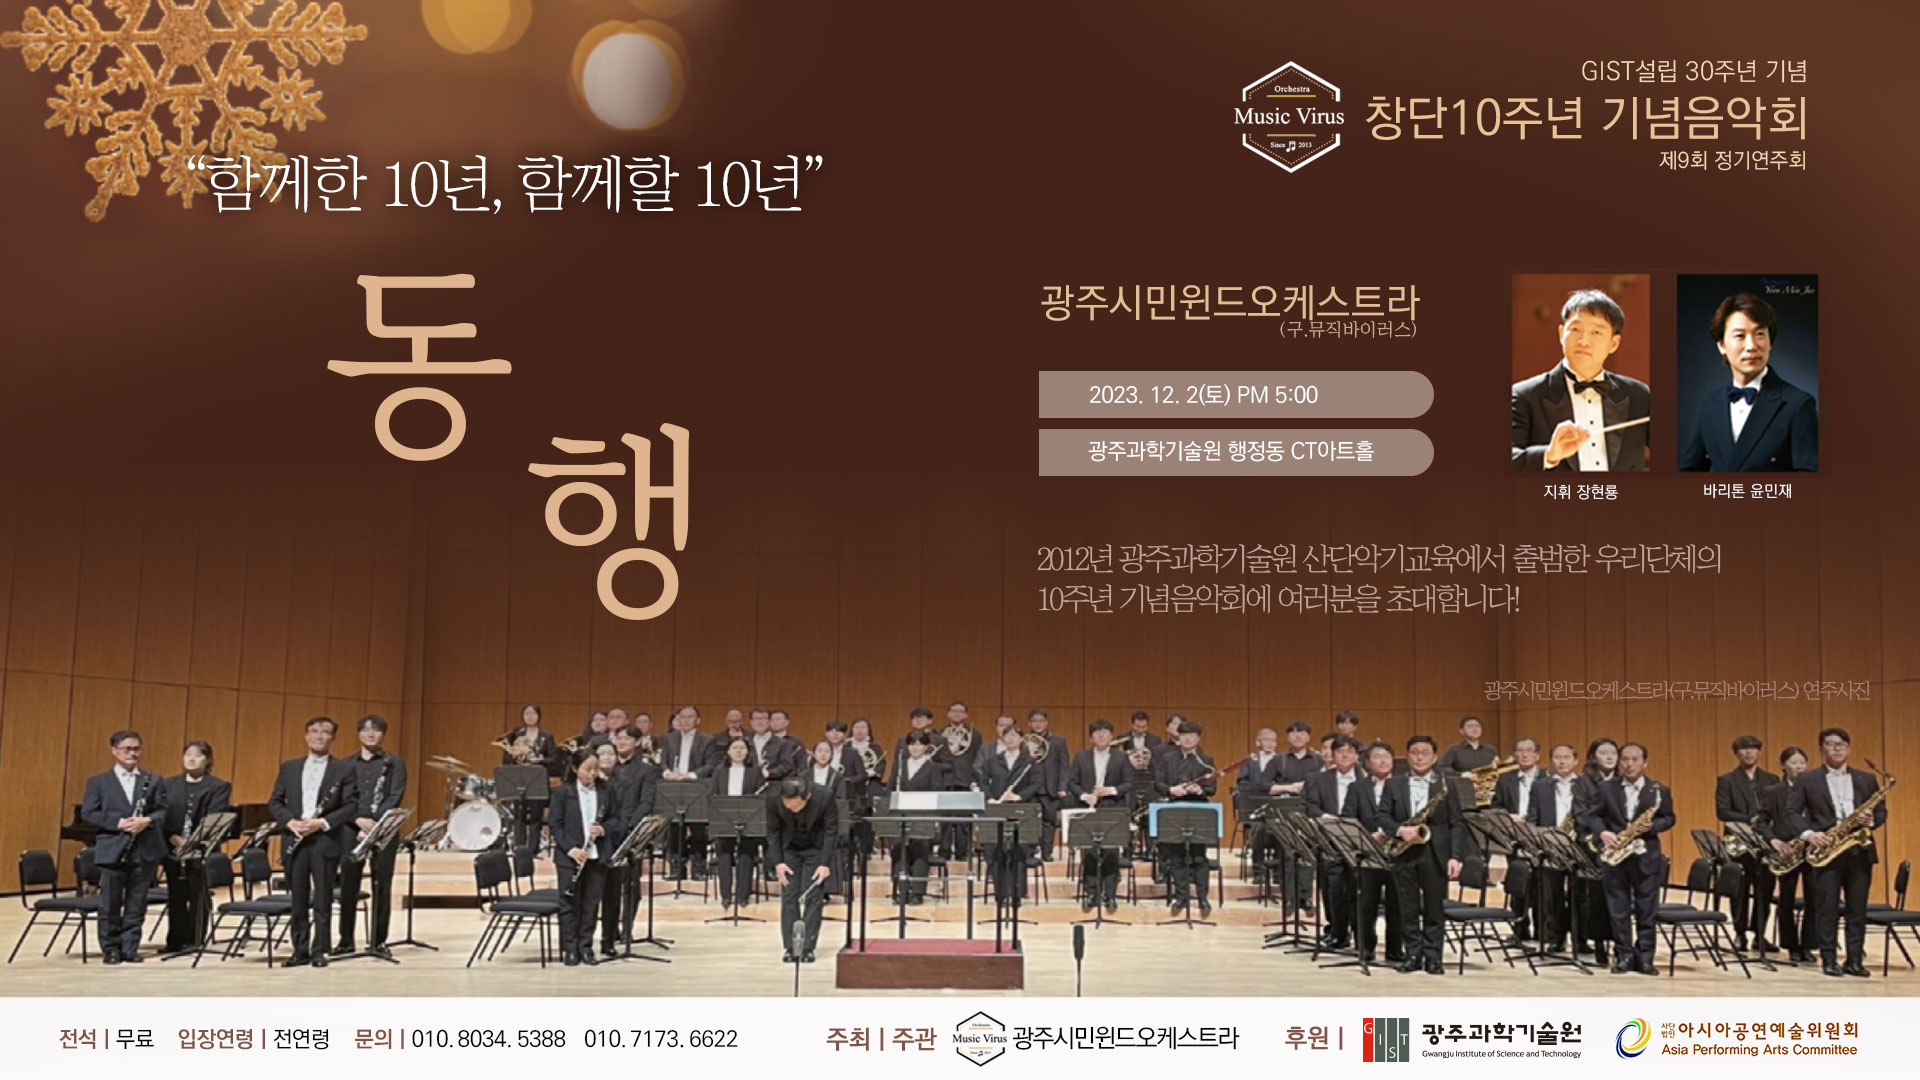 GIST, 시민 오케스트라 창단 10주년 공연 개최… 지역문화 활성화 노력 결실 이미지